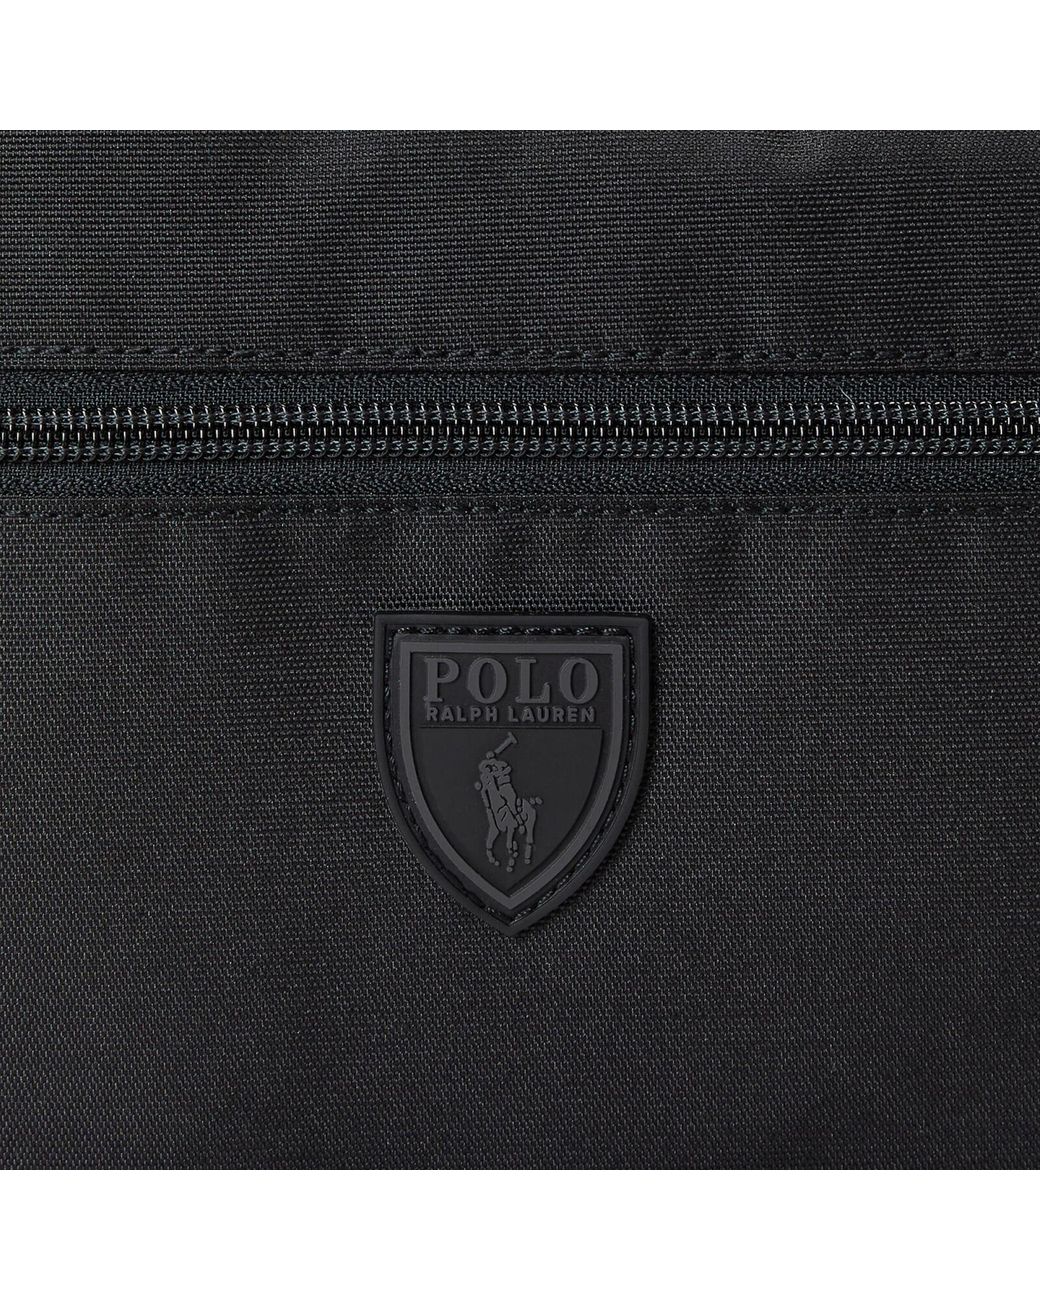 Polo Ralph Lauren Canvas Travel Bag in Black for Men | Lyst